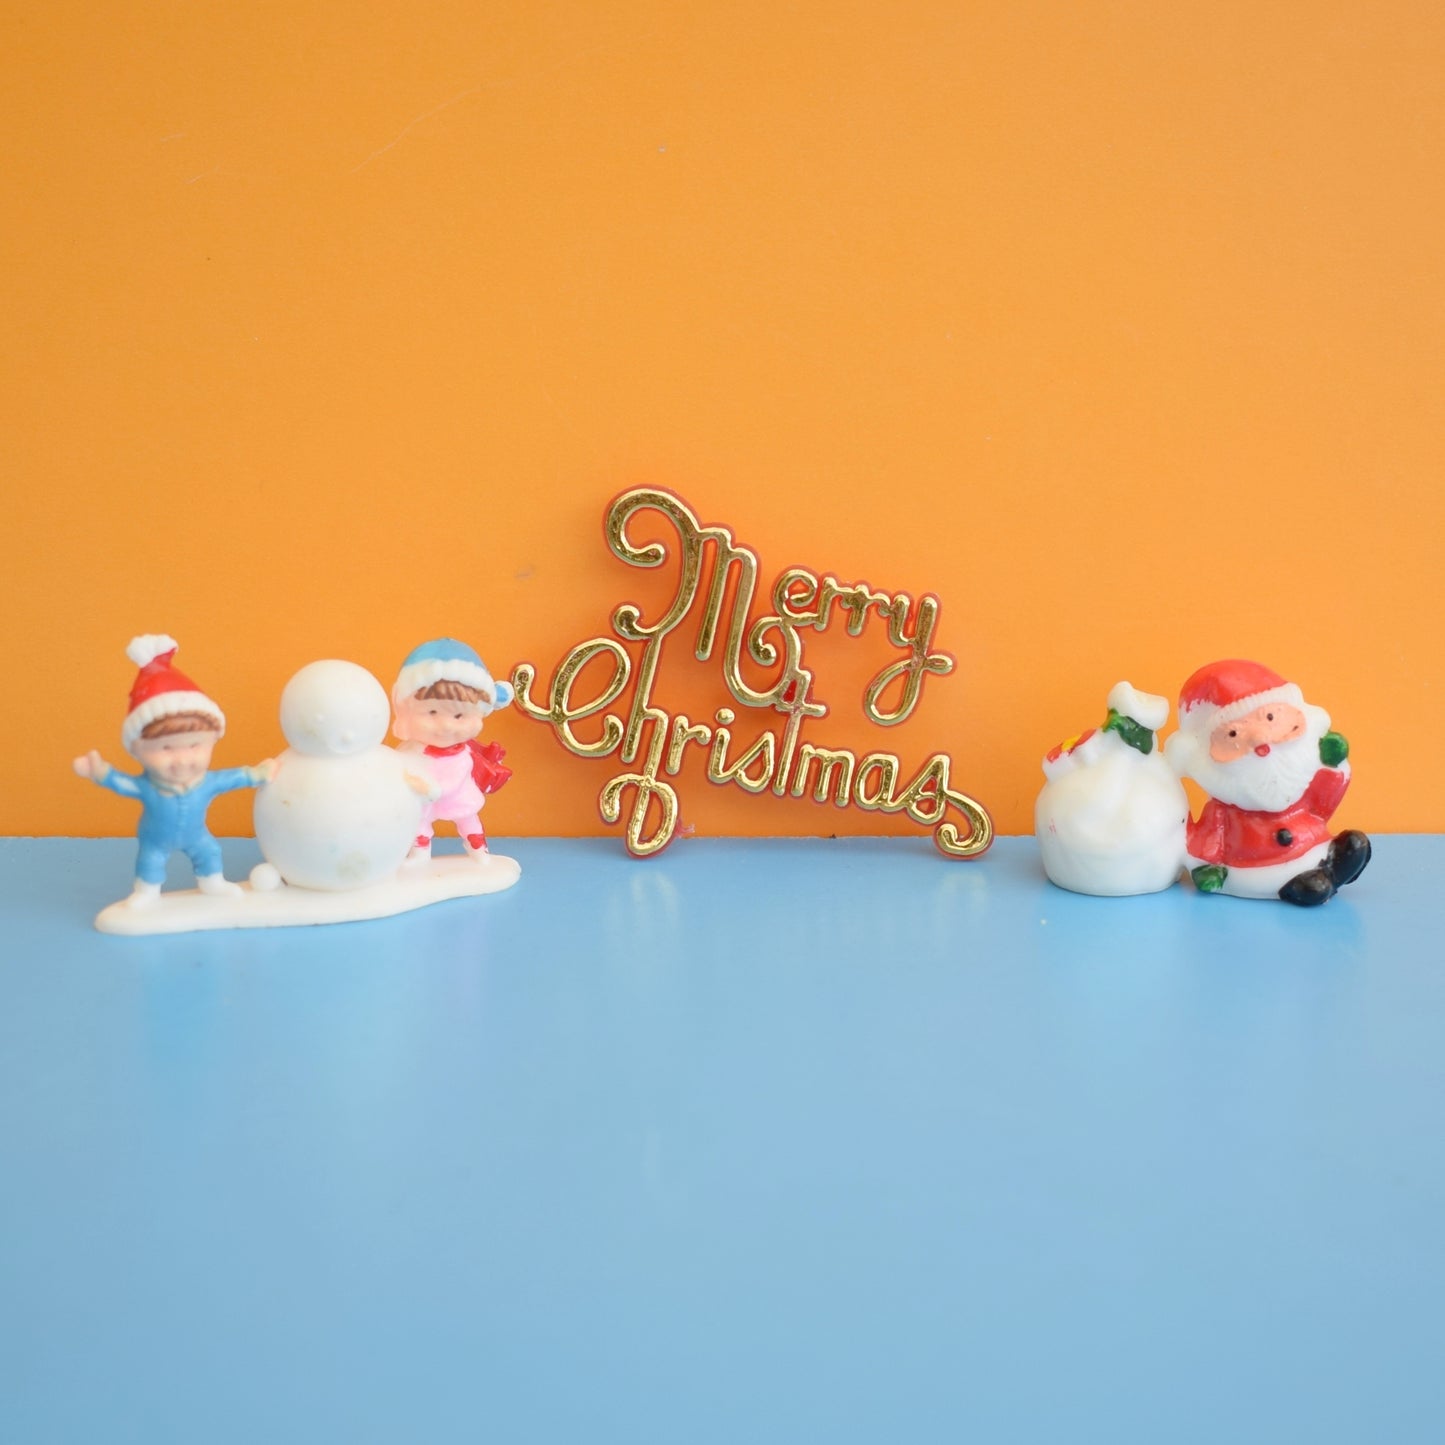 Vintage 1960s Plastic Christmas Cake Decorations - Groups